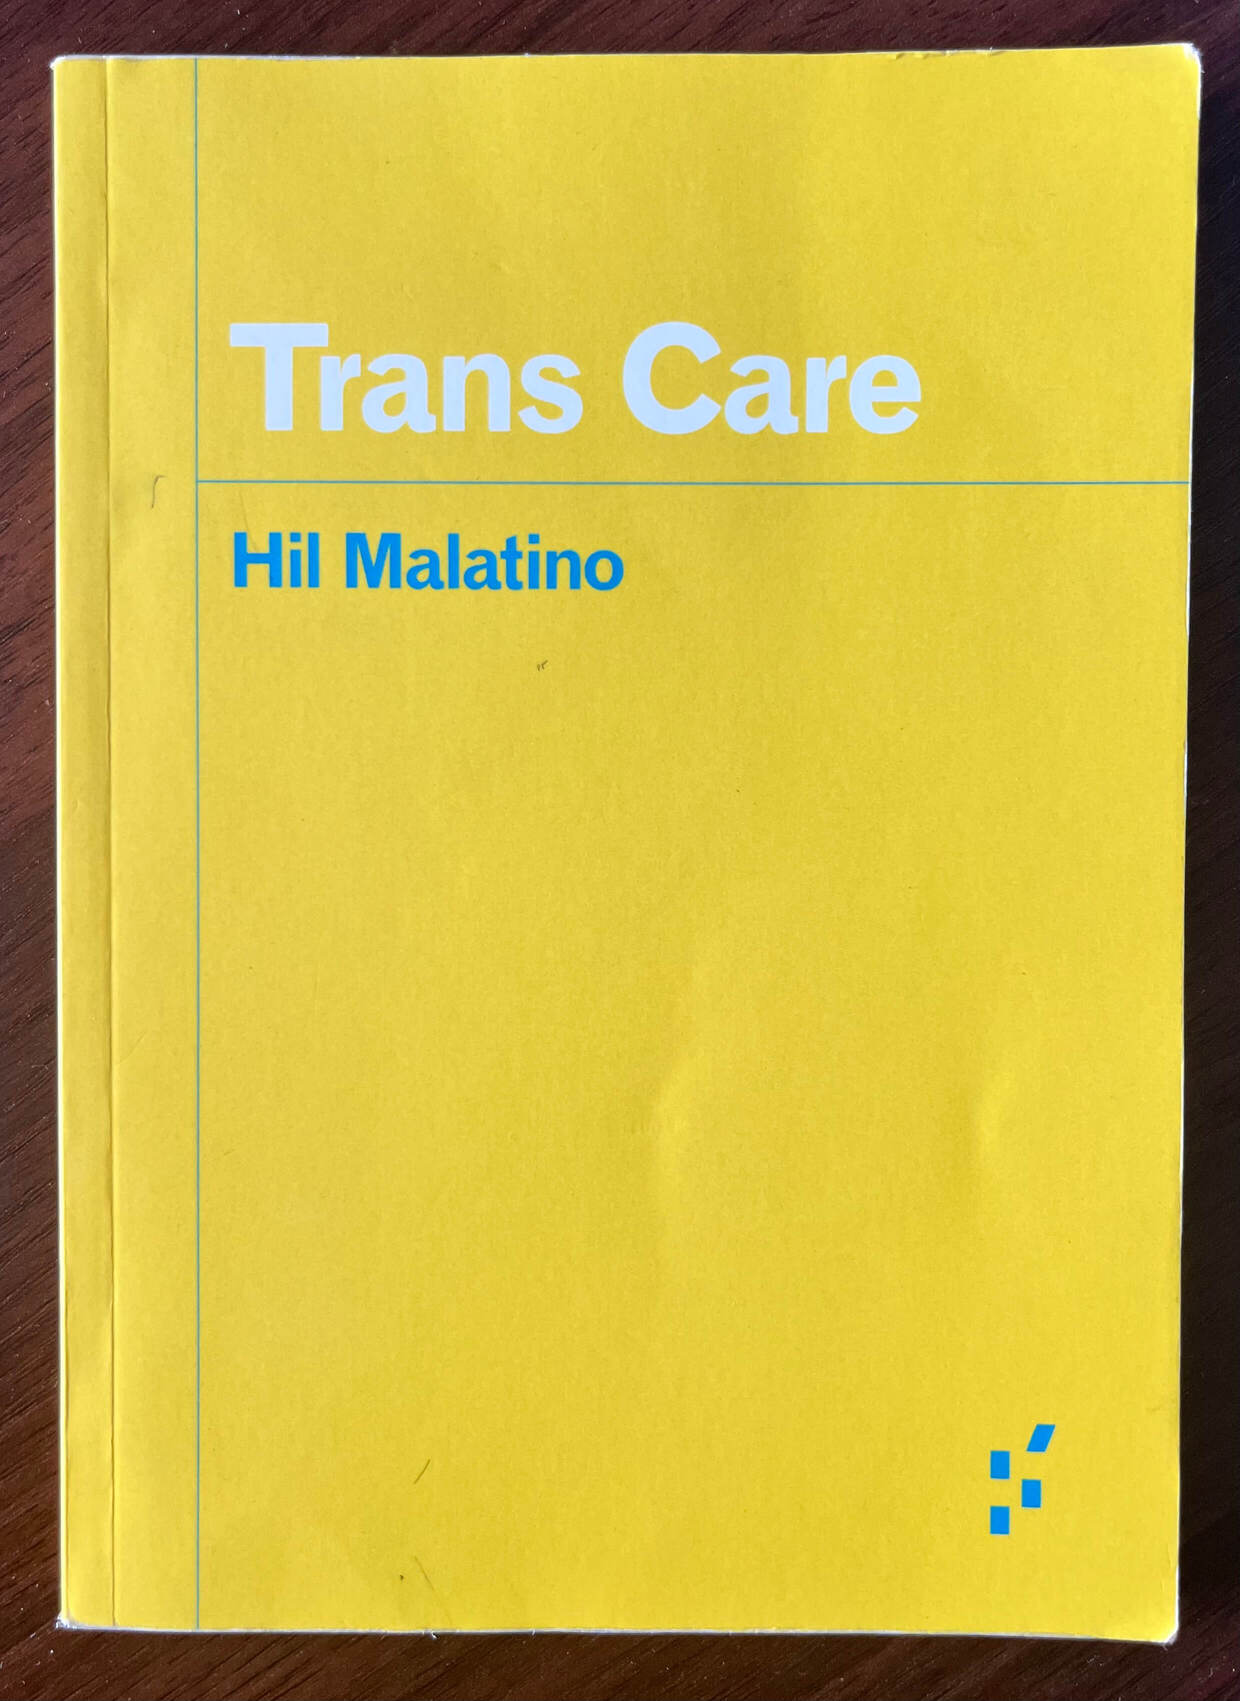 “Trans Care” by Hil Malatino.